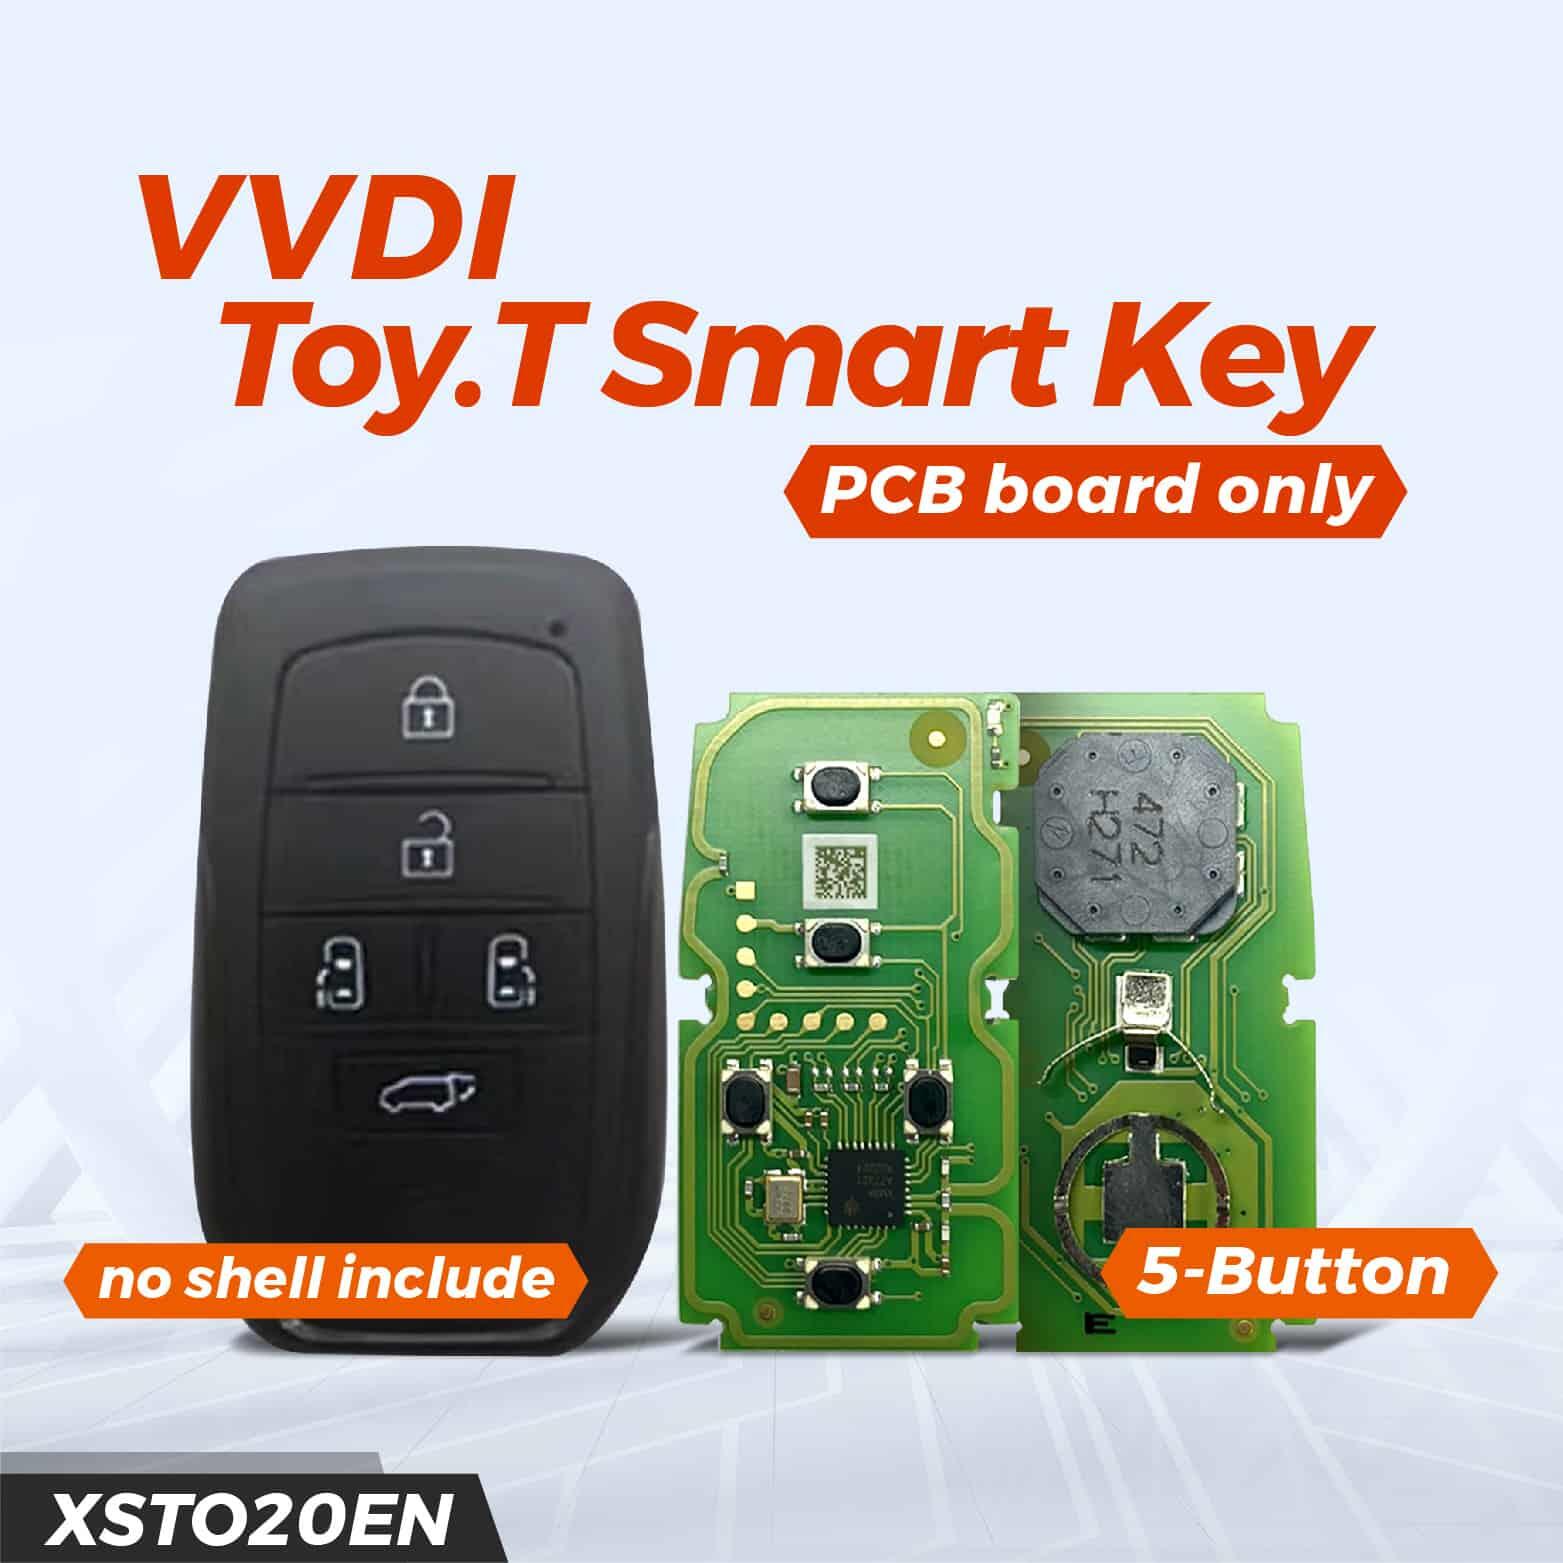 VVDI Toy.T XM38 Smart Remote